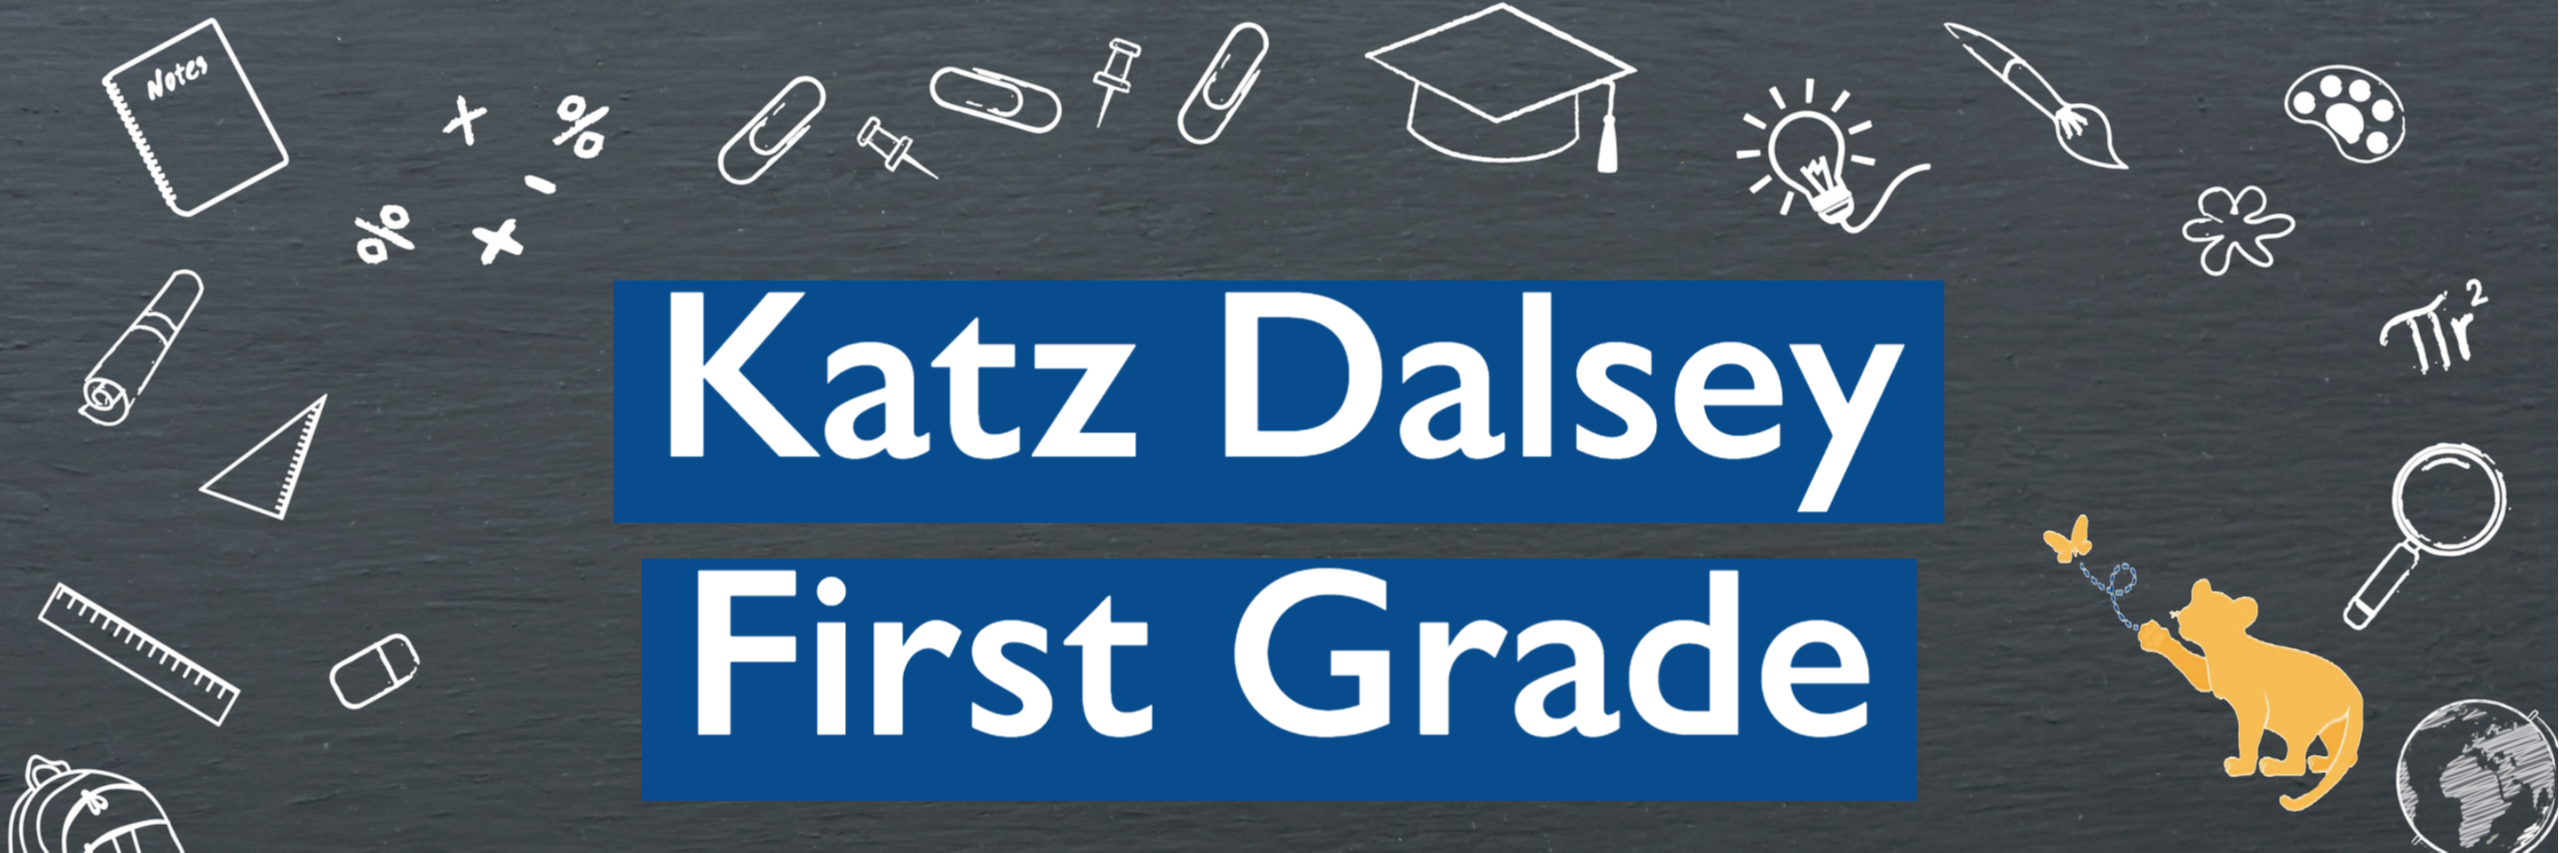 KATZ Dalsey 1st Grade